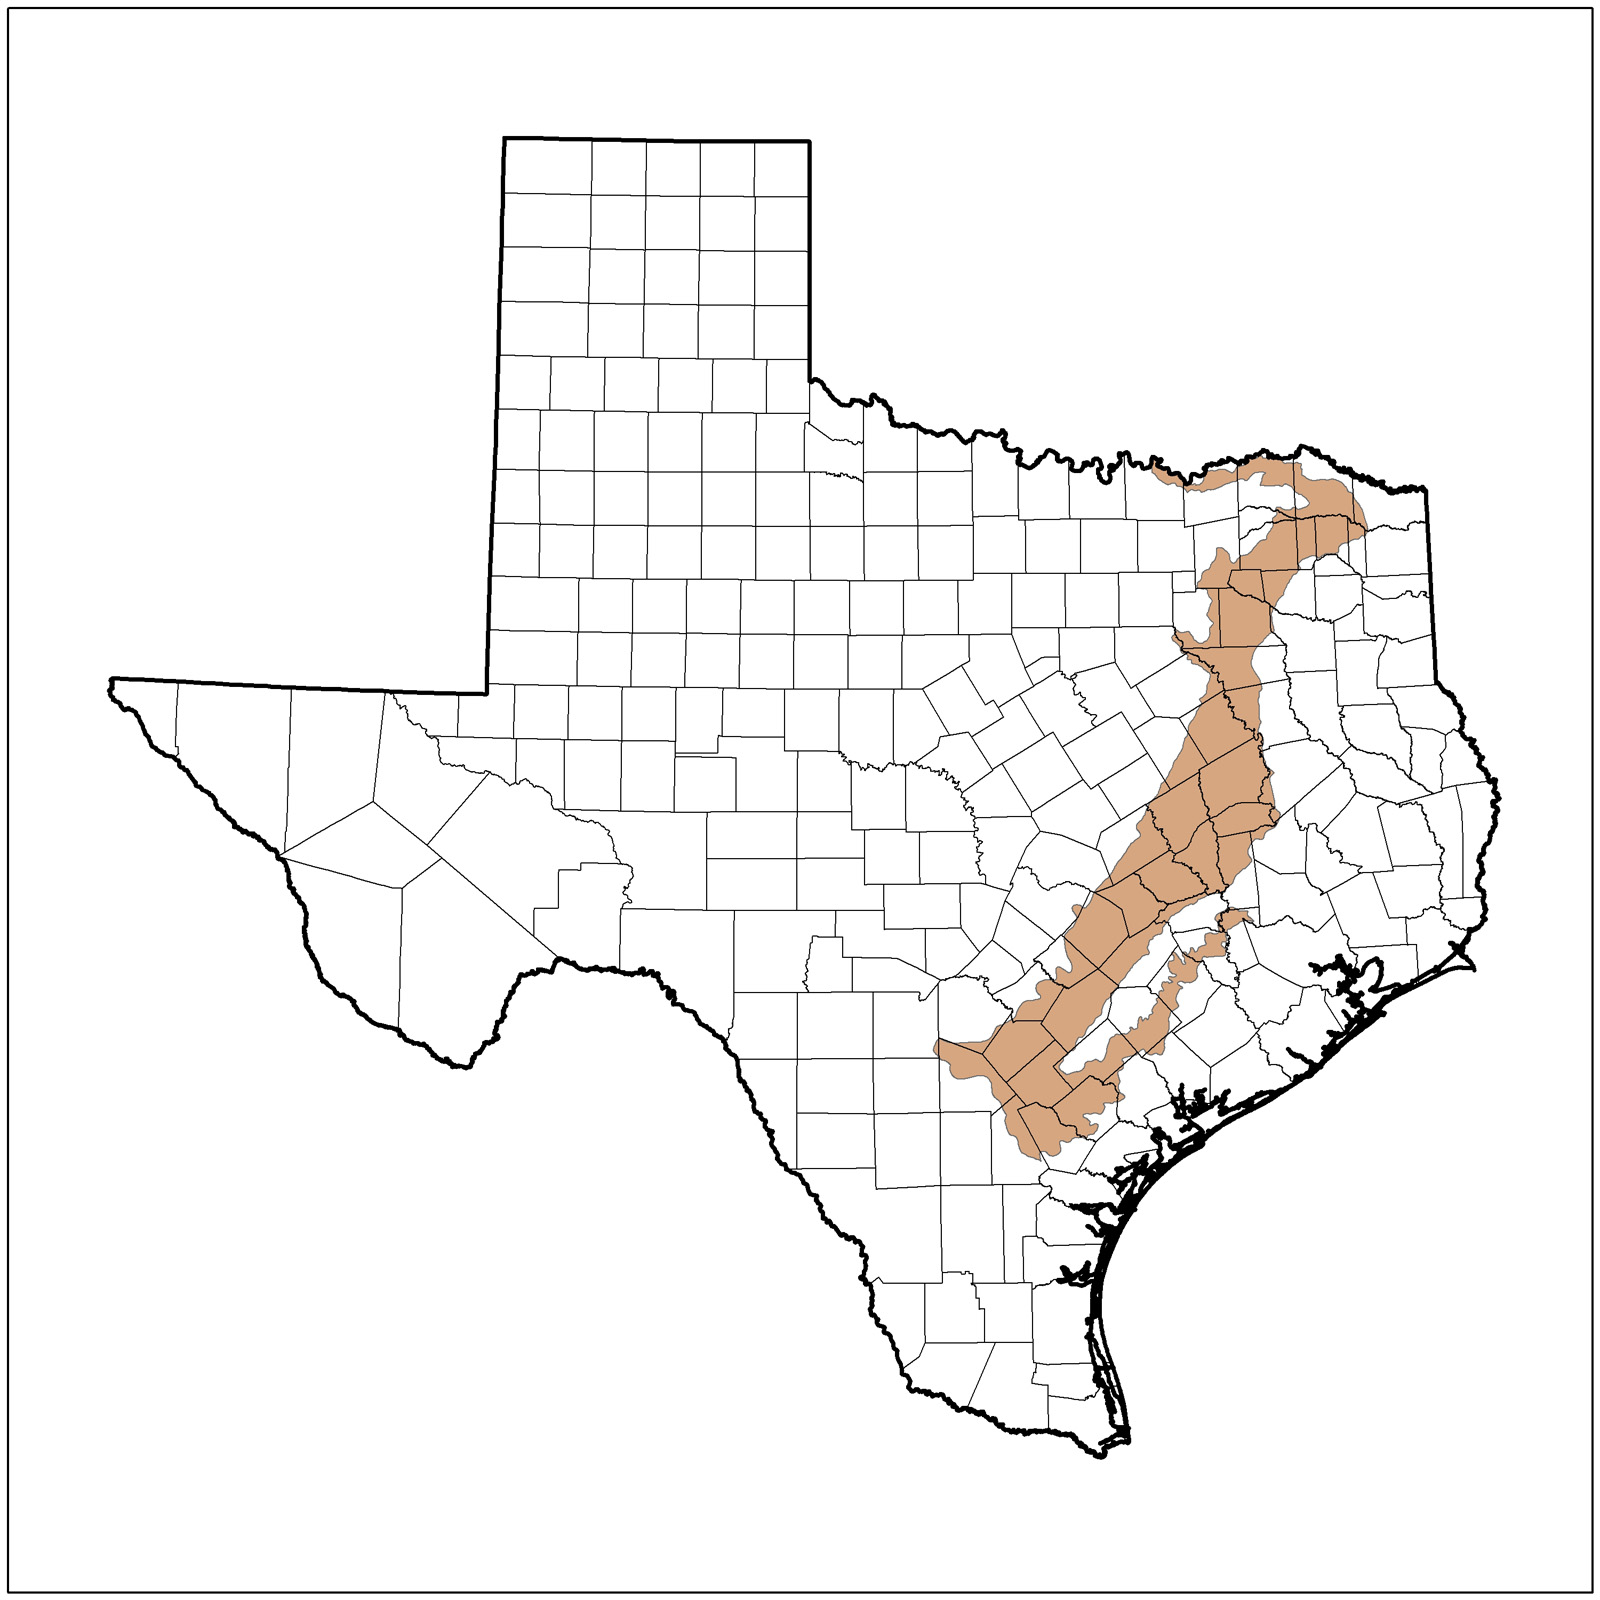 East Central Texas Plains (Post Oak Savannah) Ecoregion of Texas